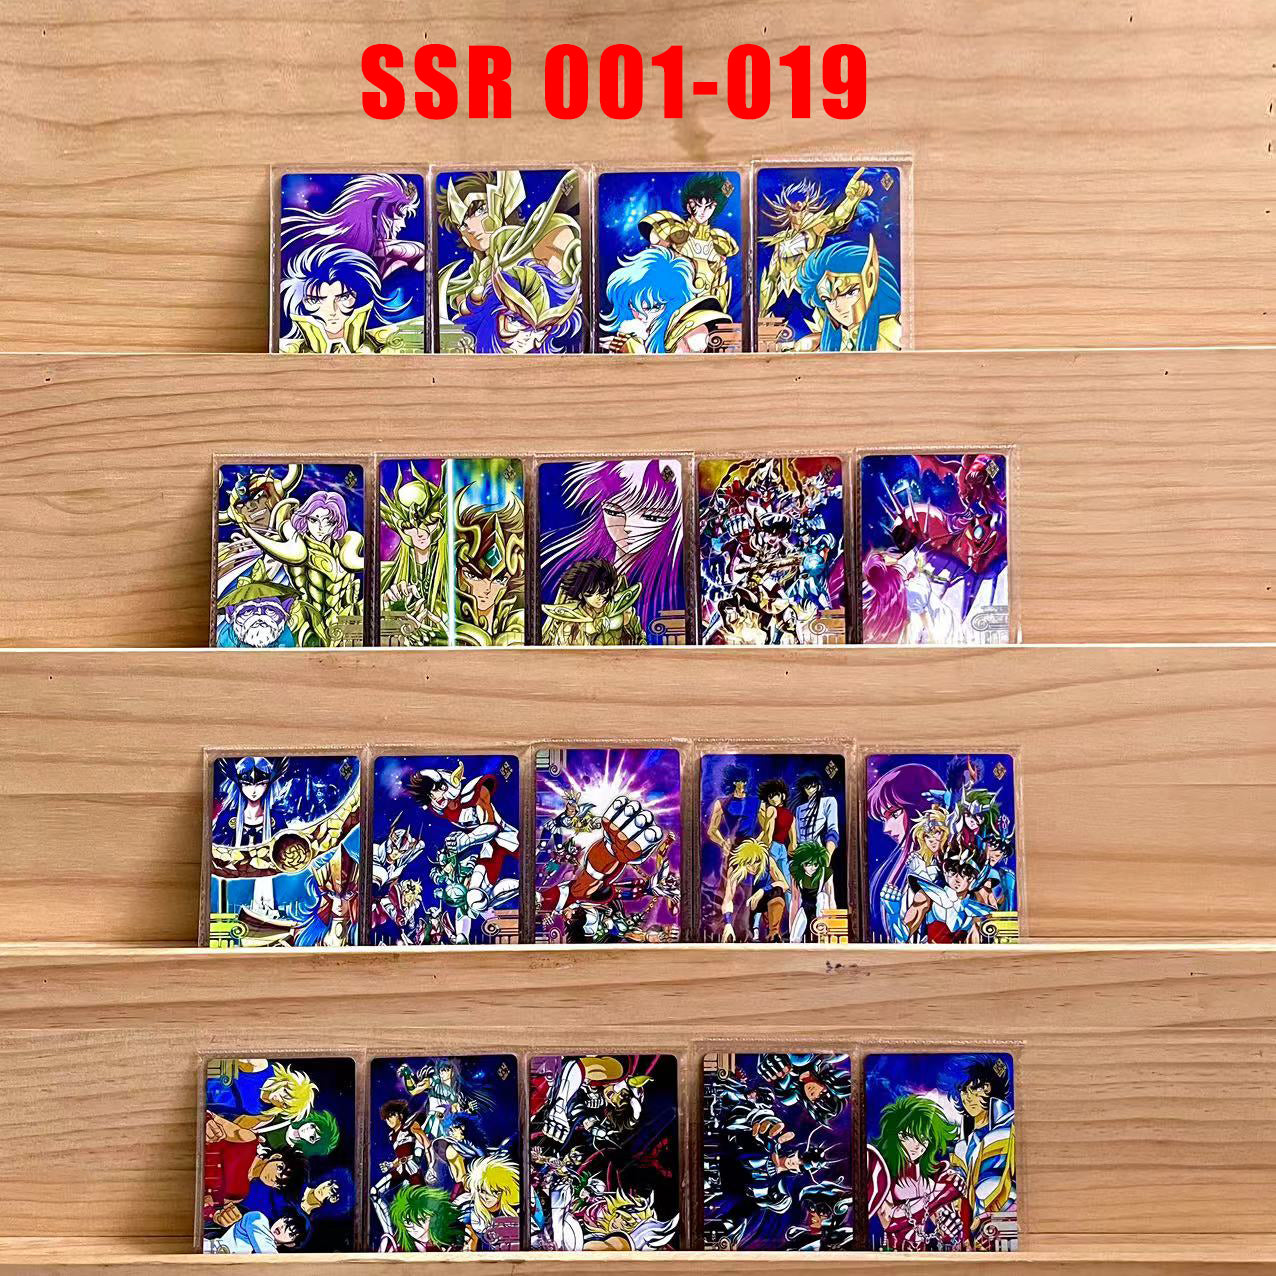 Set - Saint Seiya BP/UR/PR/AR/SSR/SR/R Card  Full Set